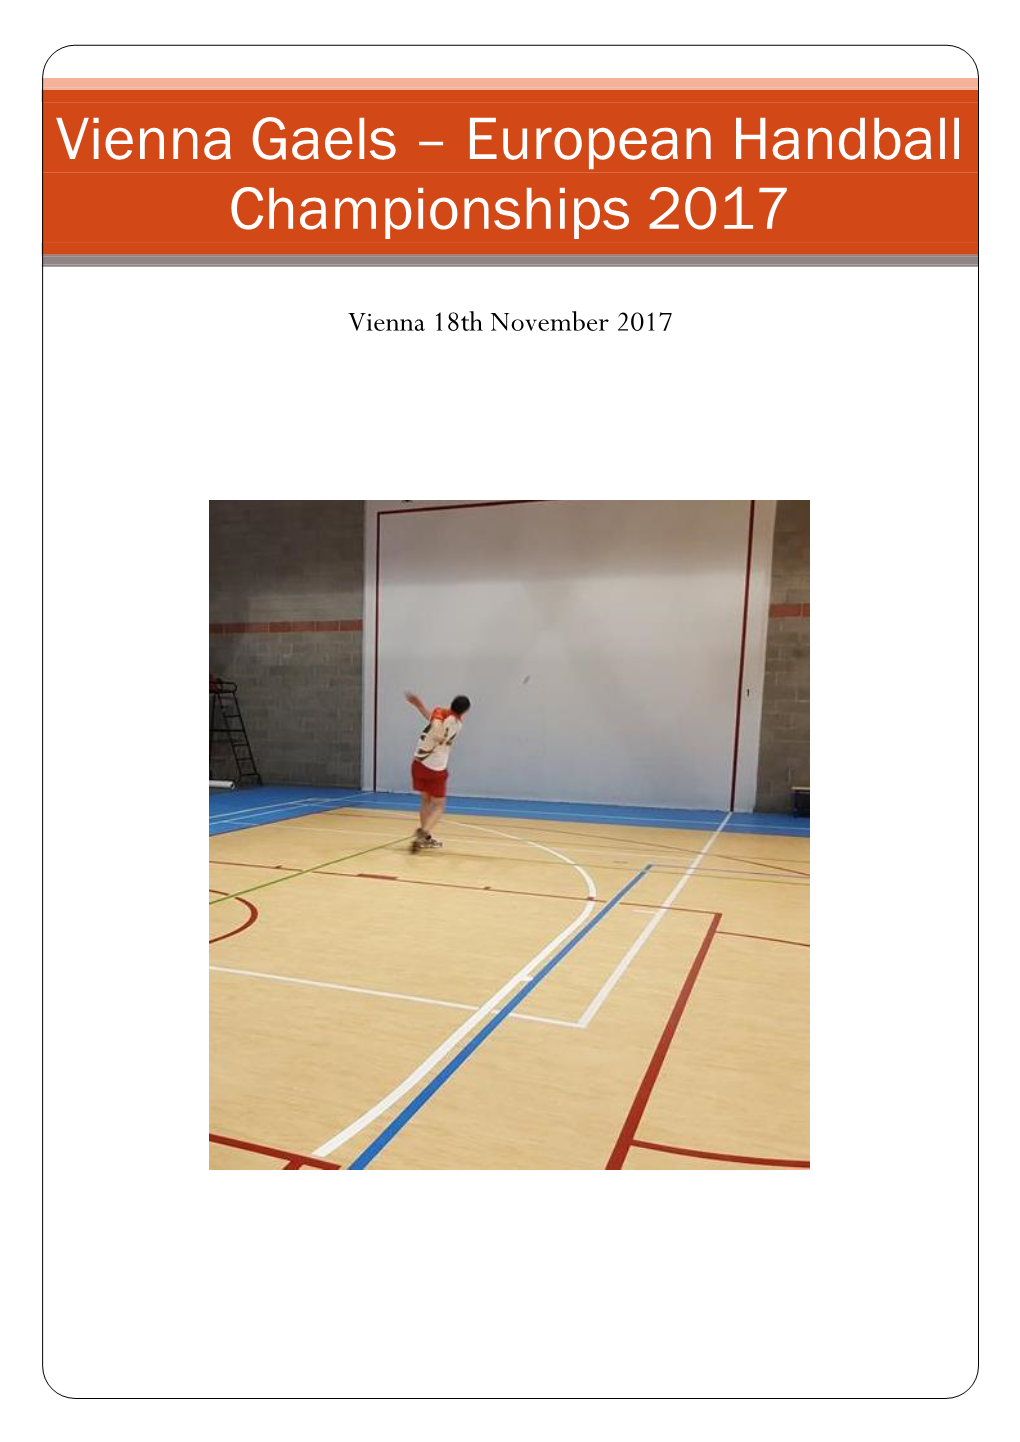 European Handball Championships 2017